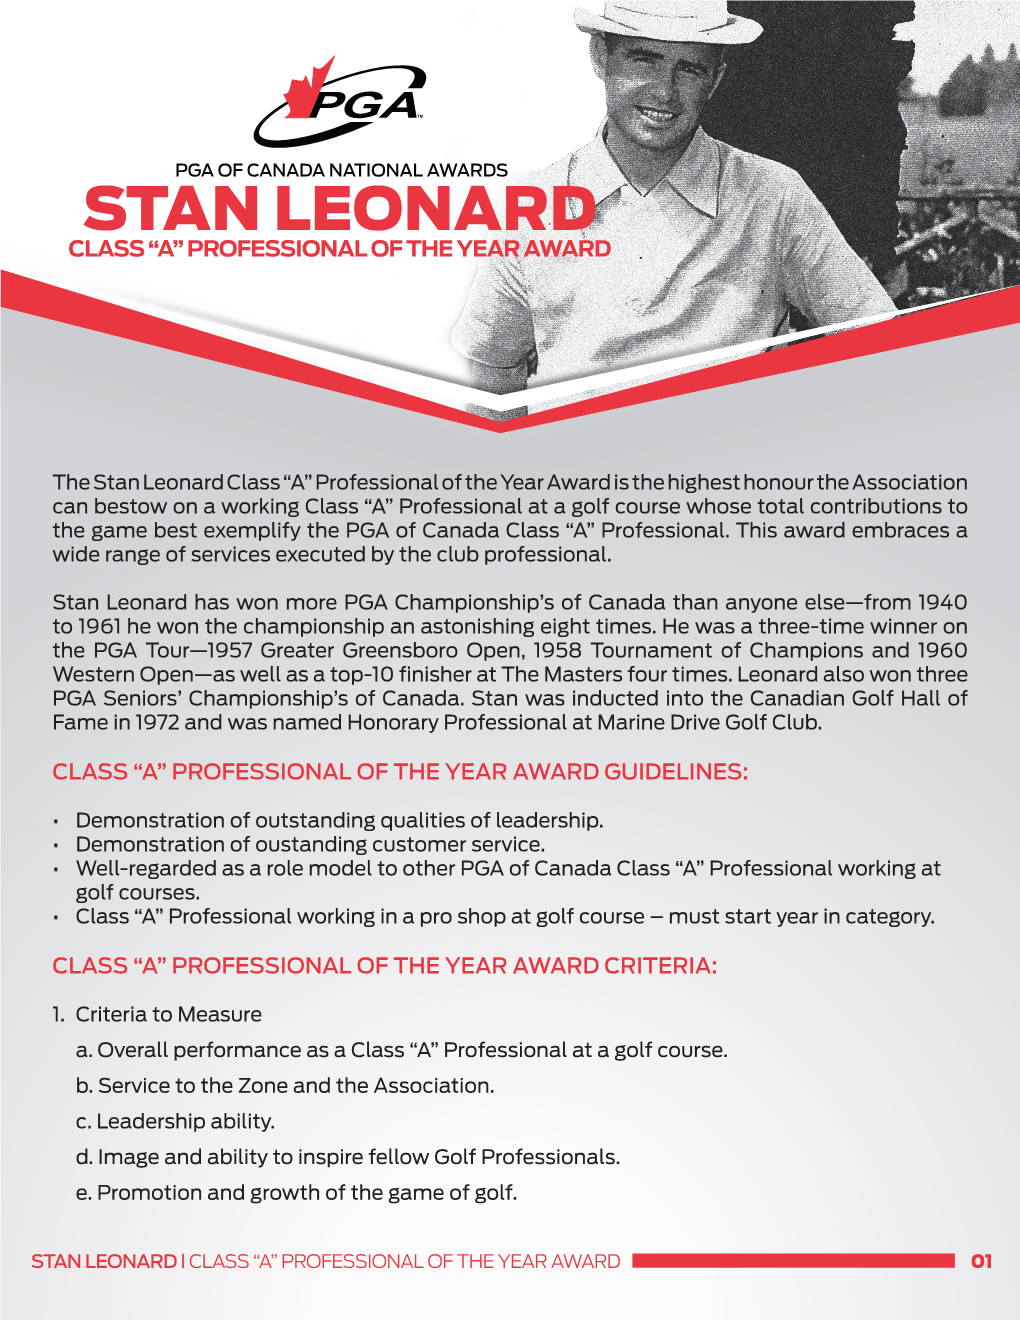 Stan Leonard Class “A” Professional of the Year Award